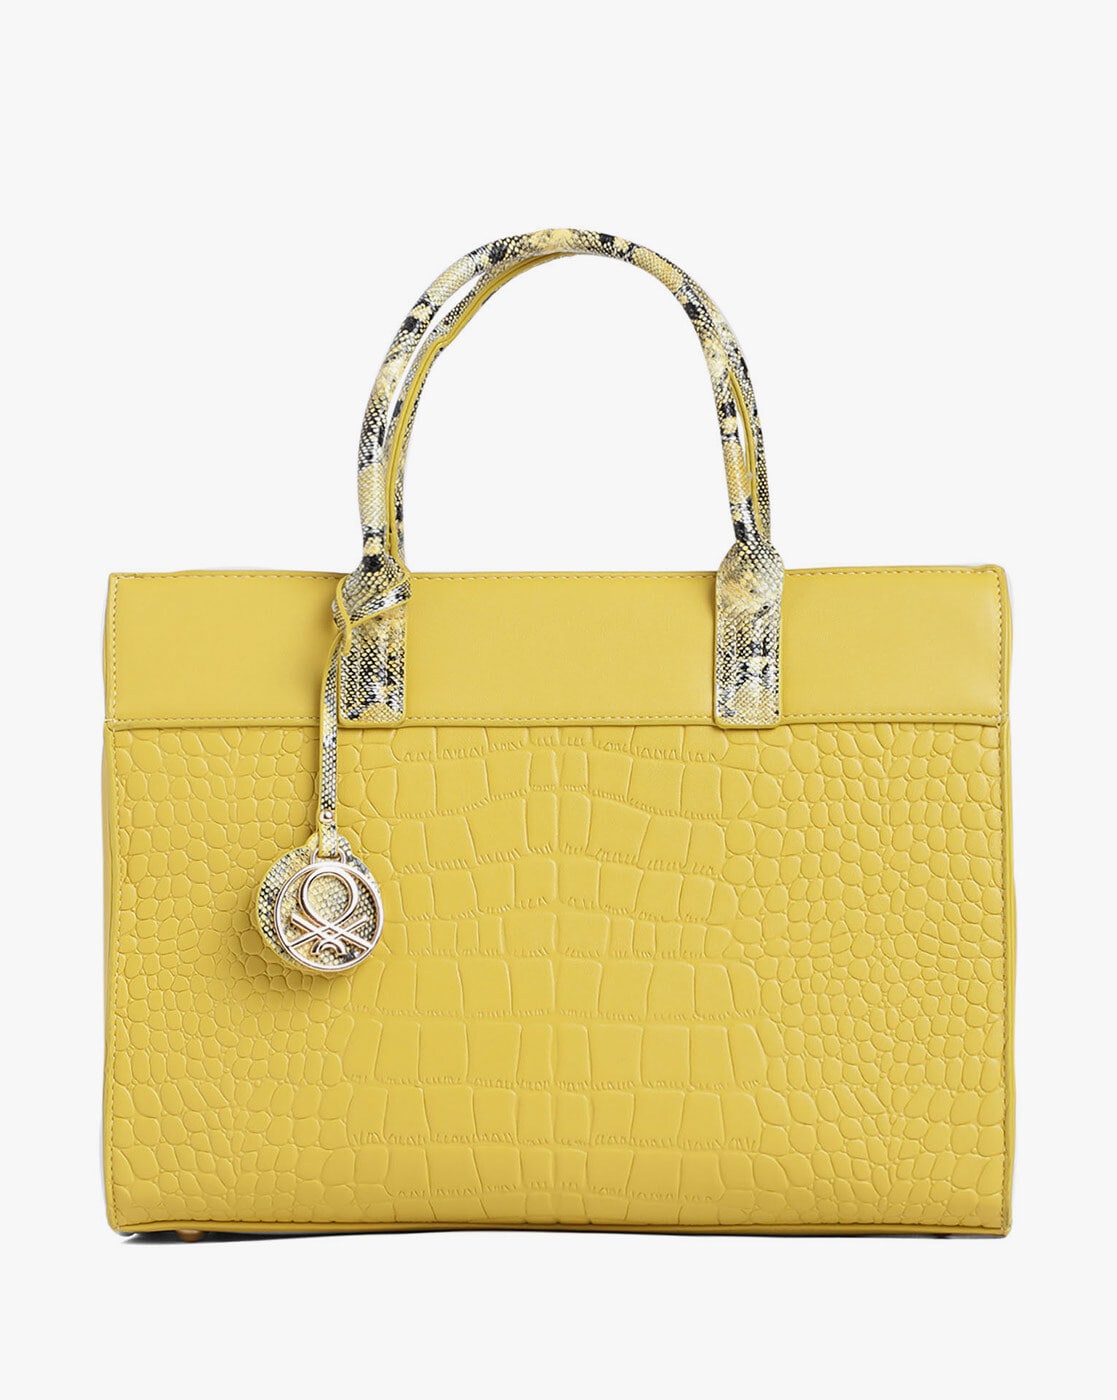 Update on Hermès Bag Prices: February 2022 - PurseBlog